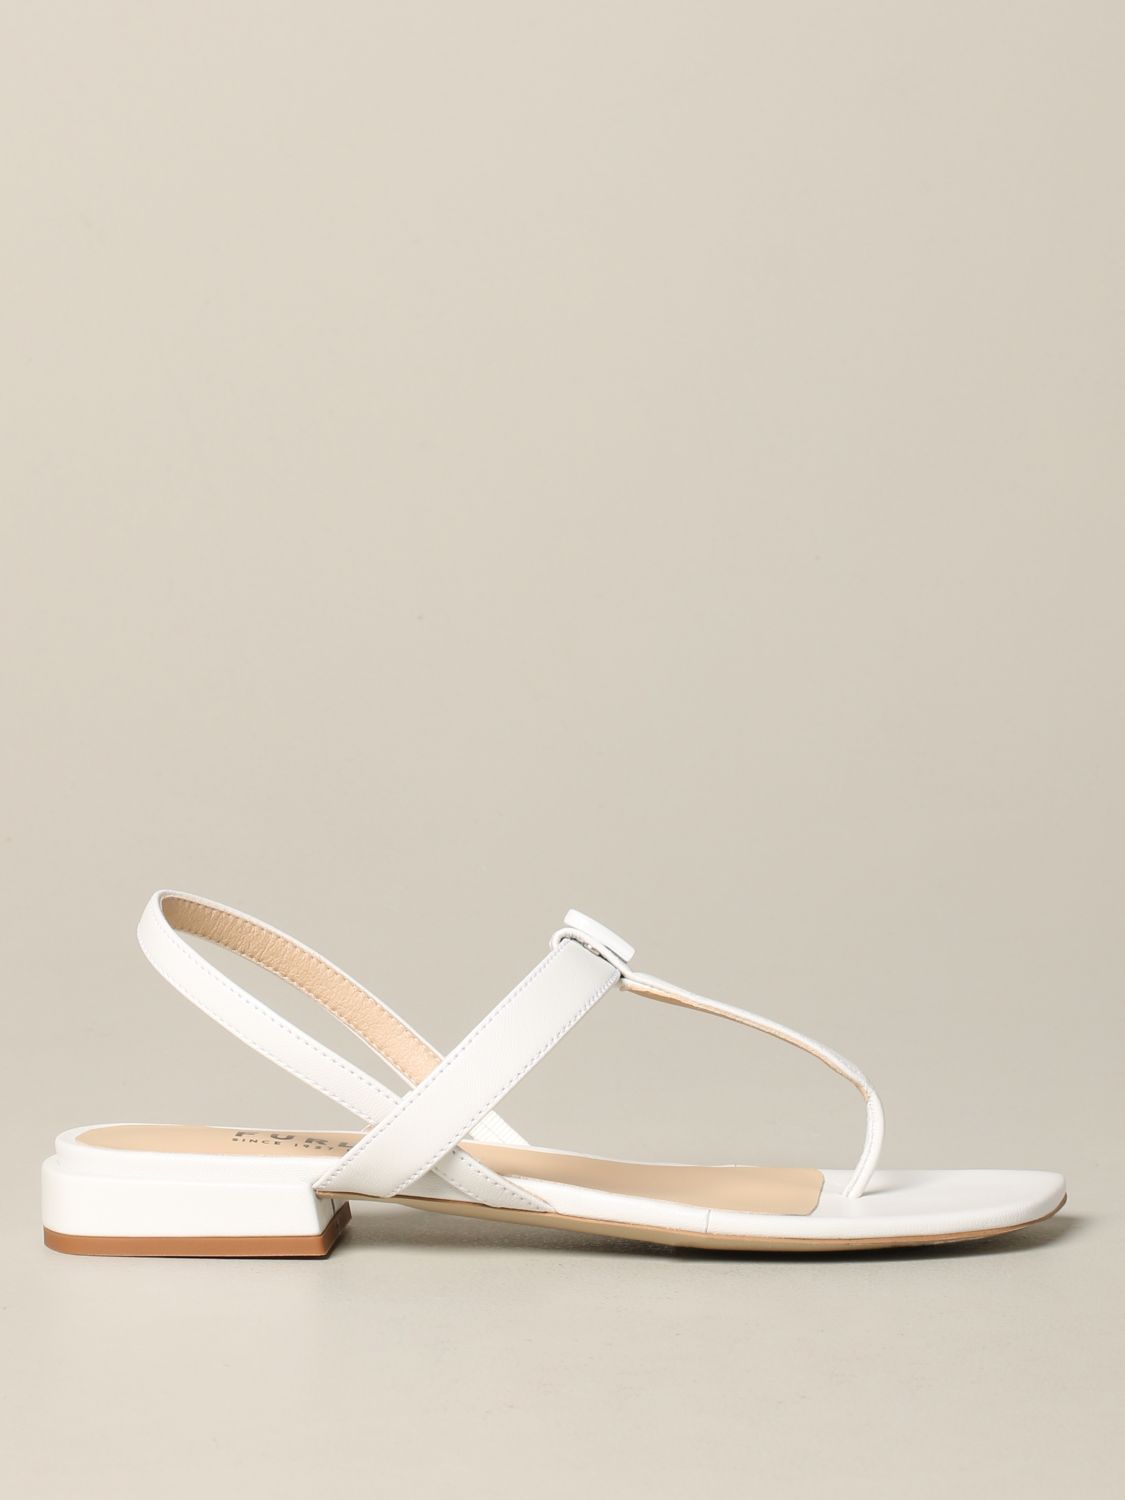 Furla Outlet: Yc81 flat sandal in nappa leather - White | Furla flat ...